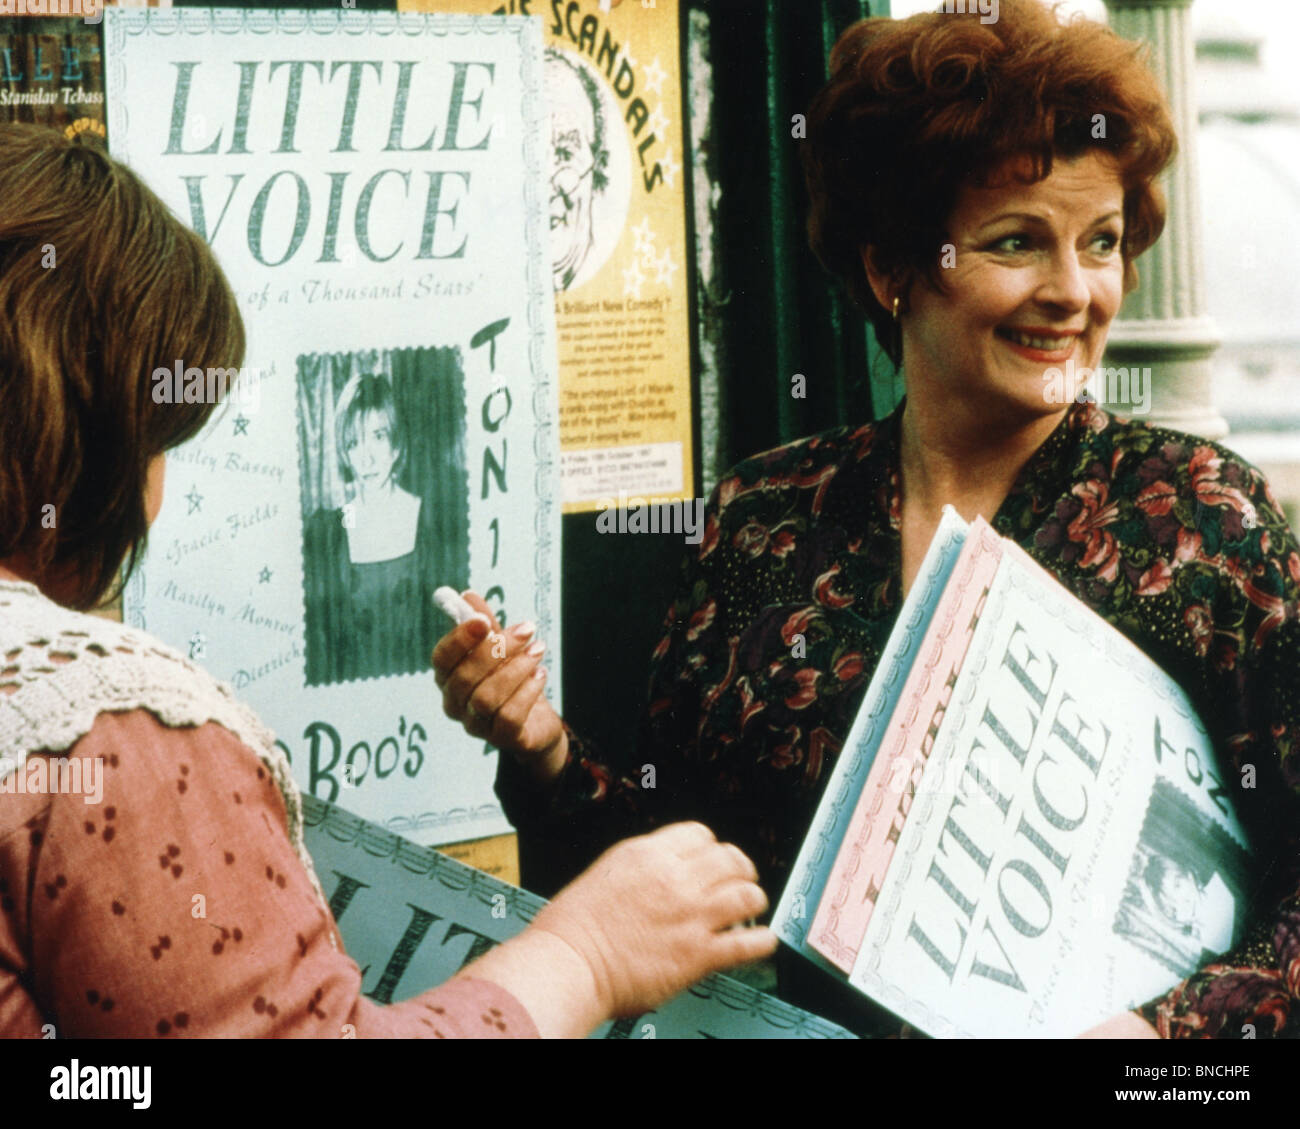 LITTLE VOICE  1998 Miramax film with Brenda Blethyn Stock Photo